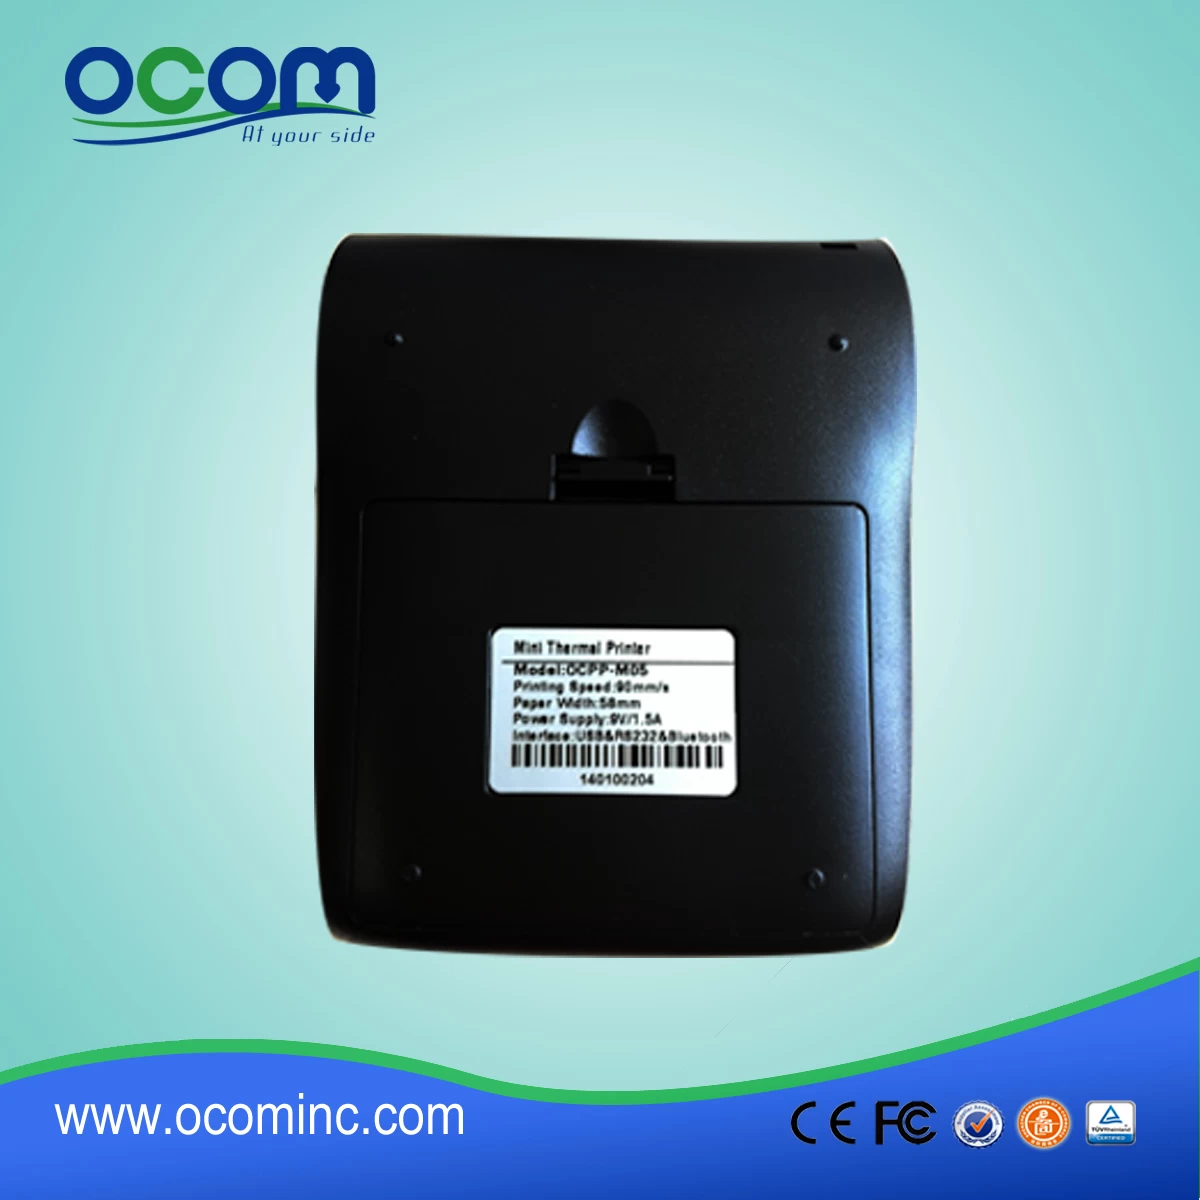 58mm Mini Portable Android bluetooth Thermal Printer OCPP-M05